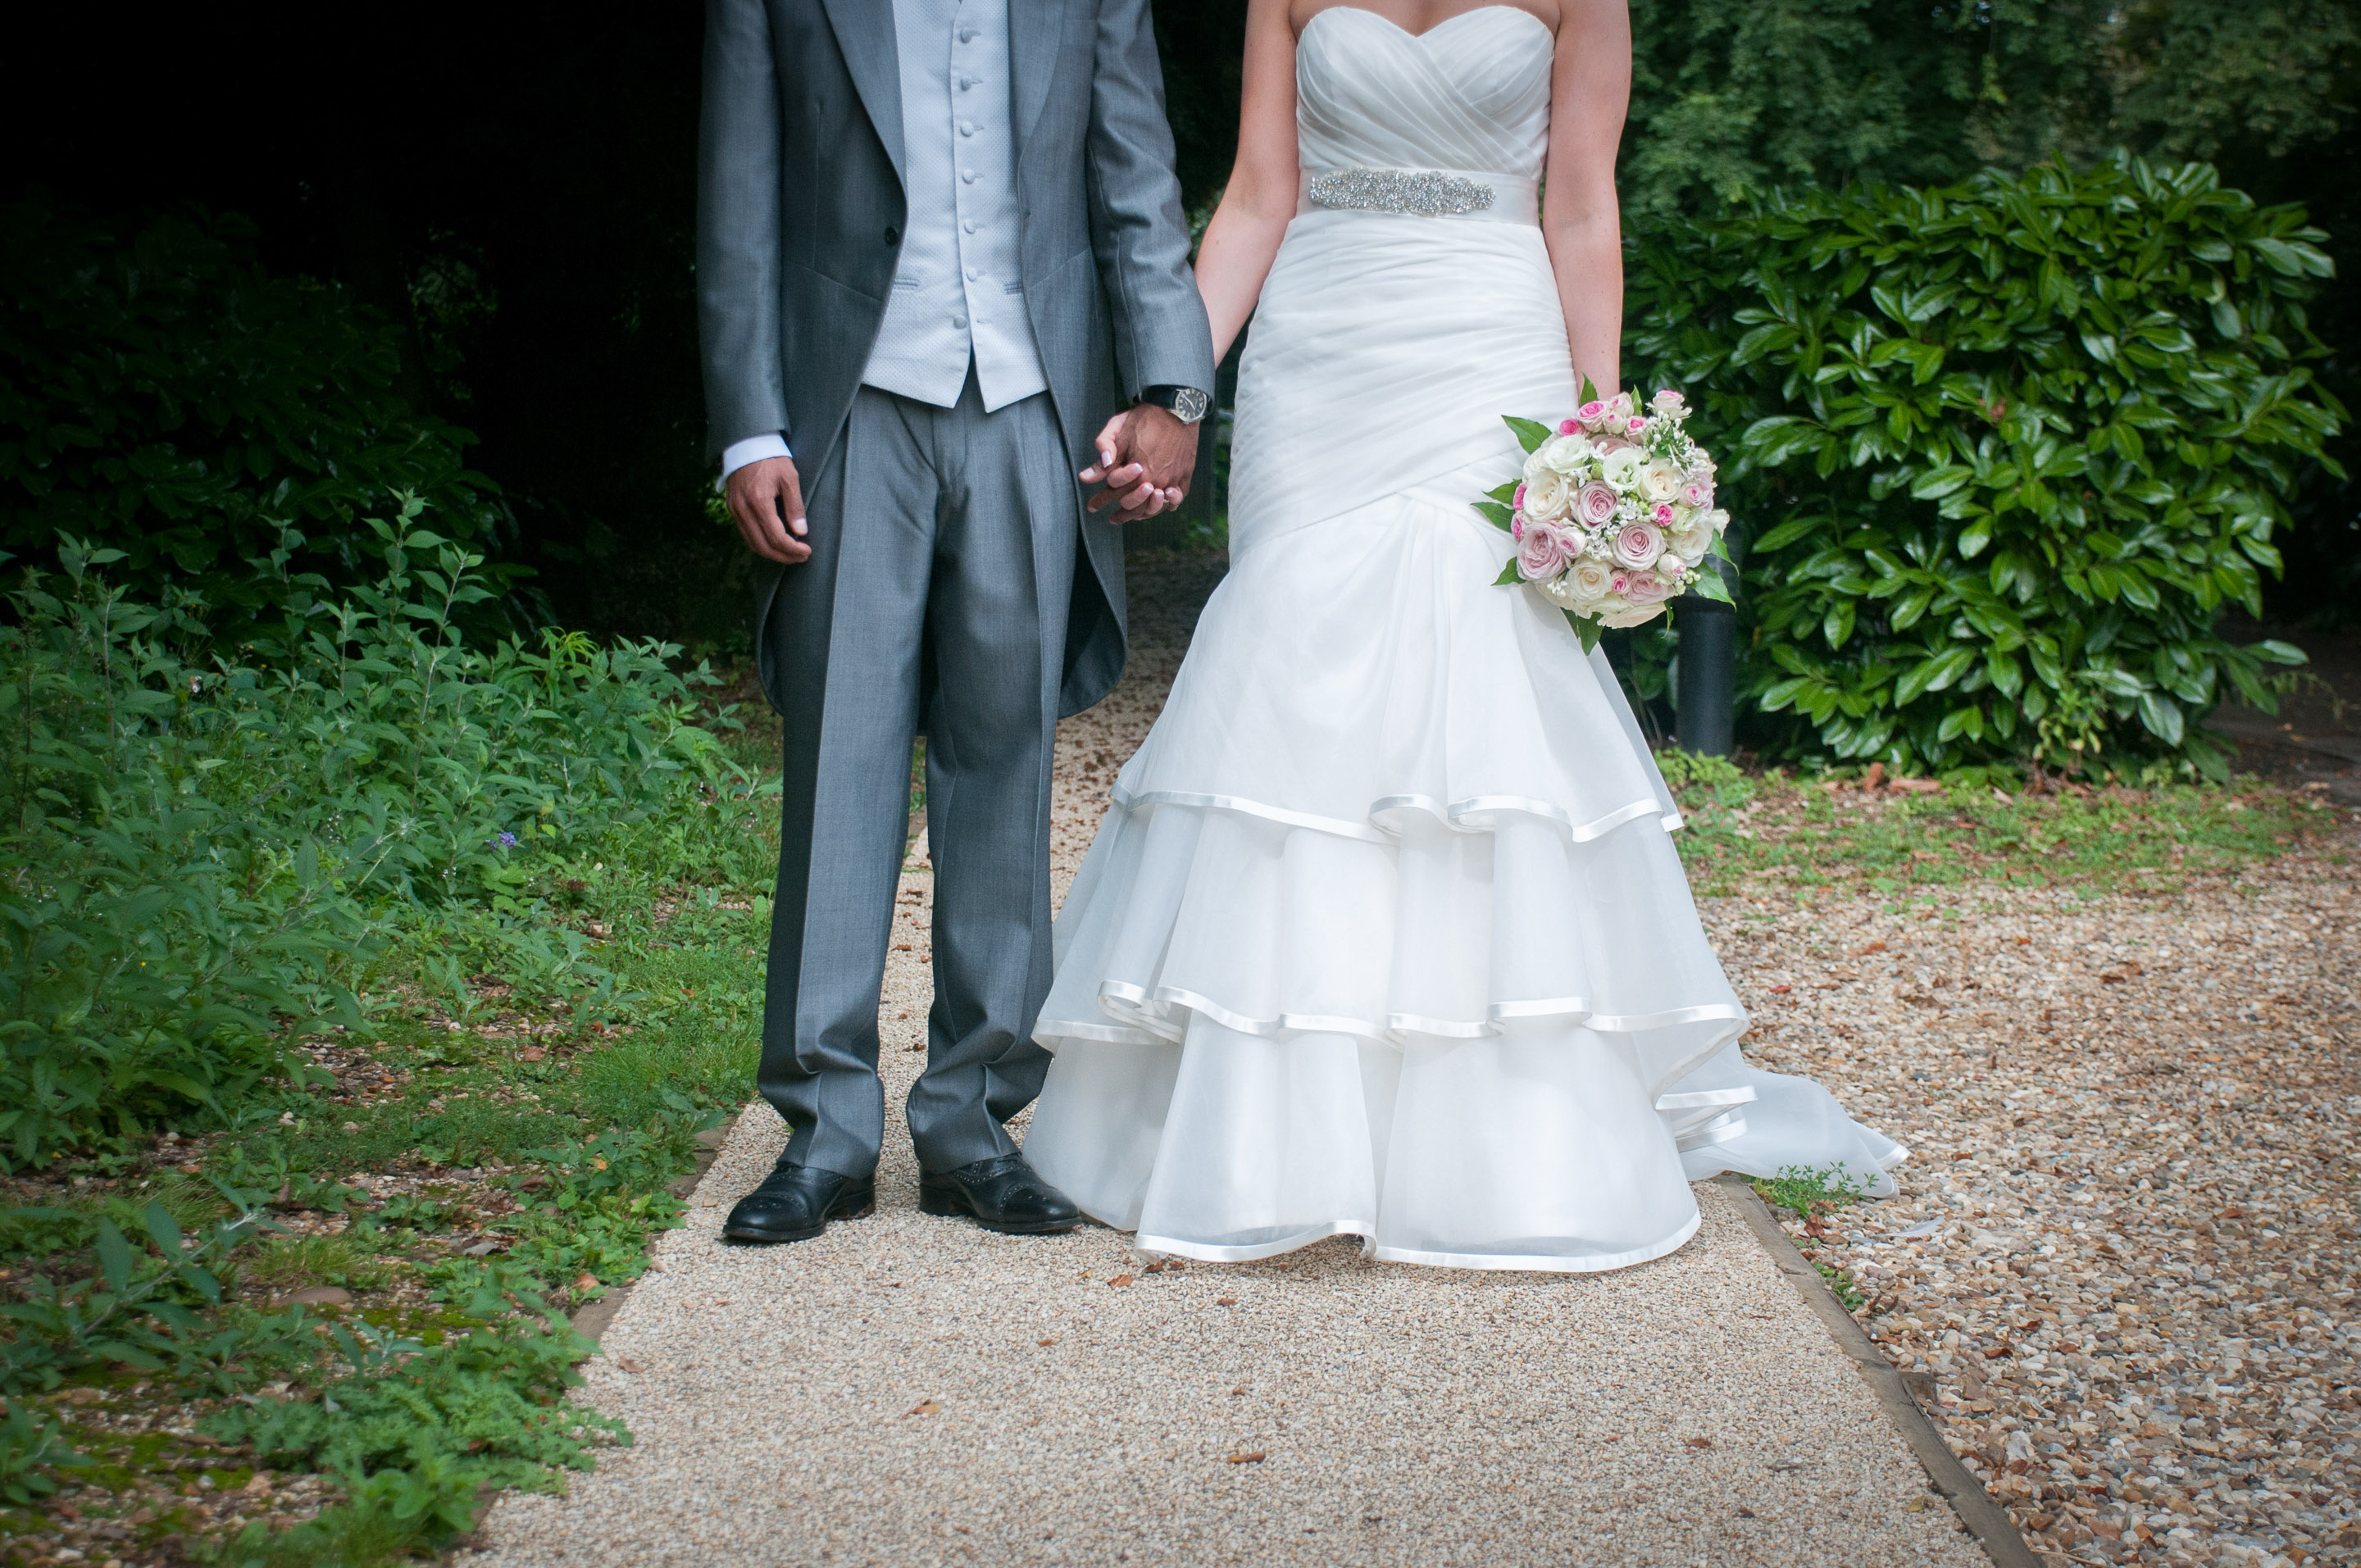 Feet shot - bride and groom